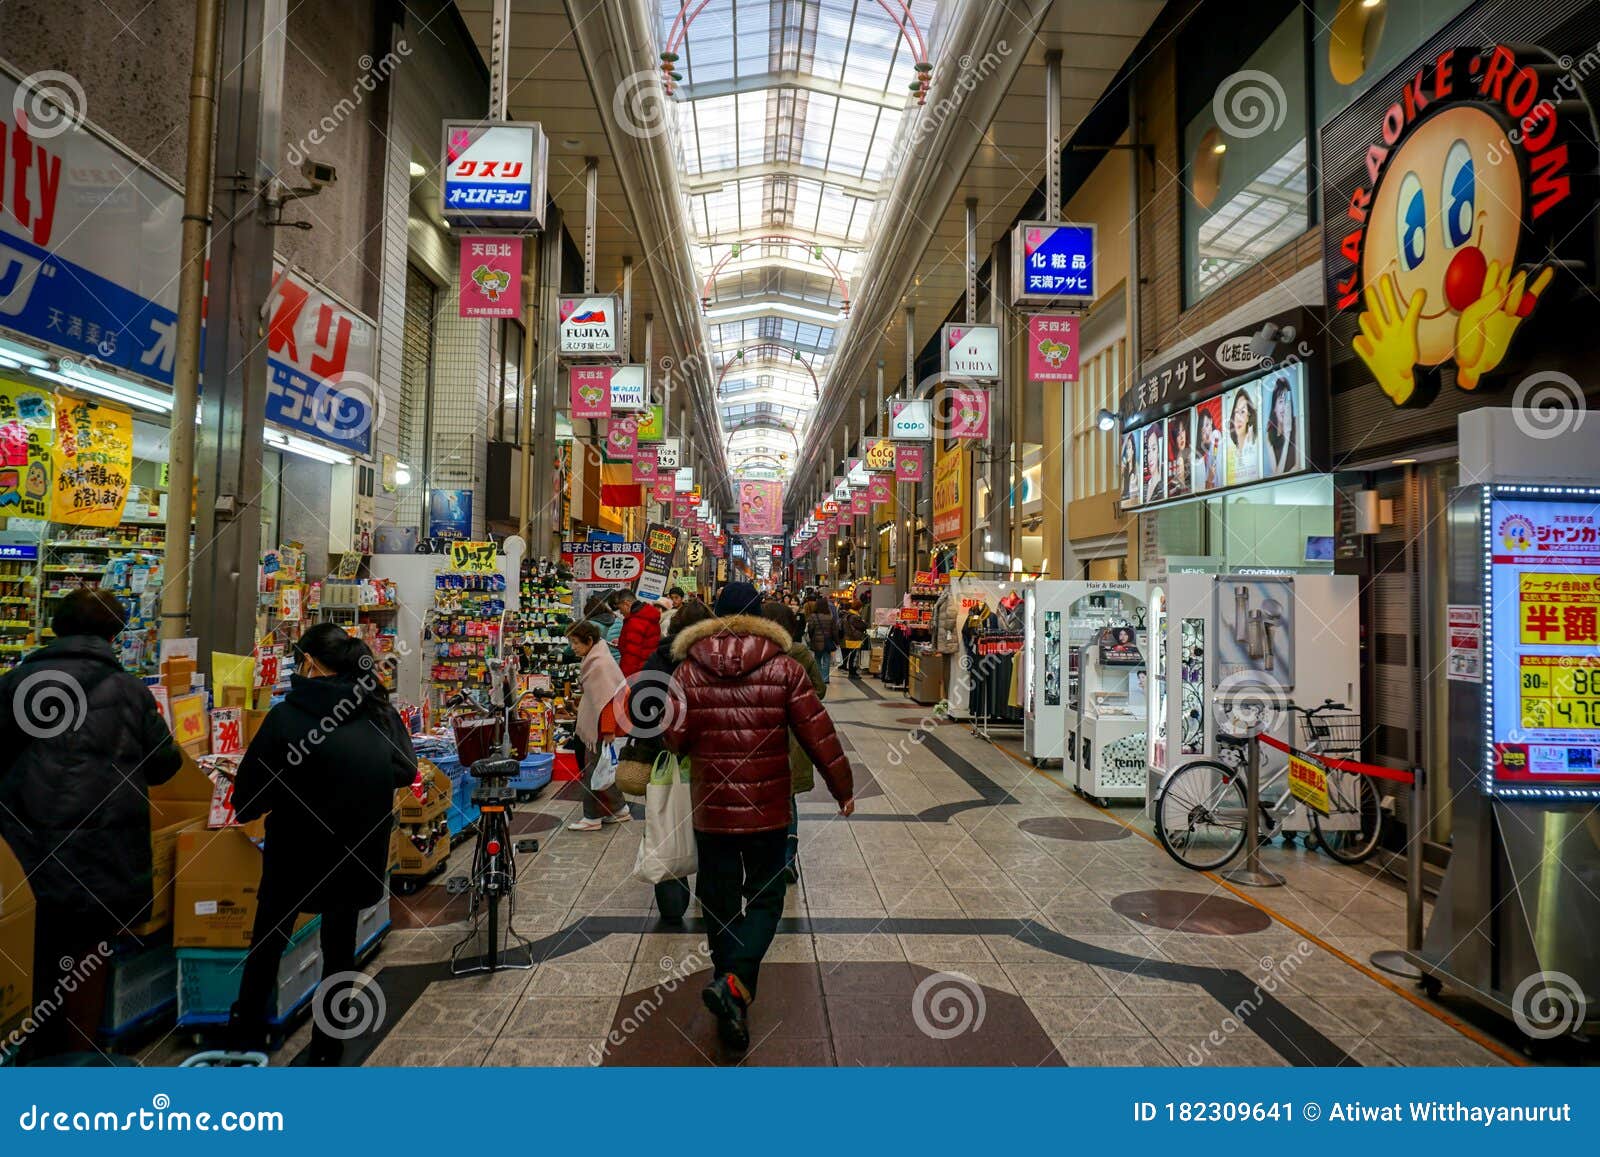 Tenjinbashisuji Shopping Street Editorial Photo Image Of Downtown Covering